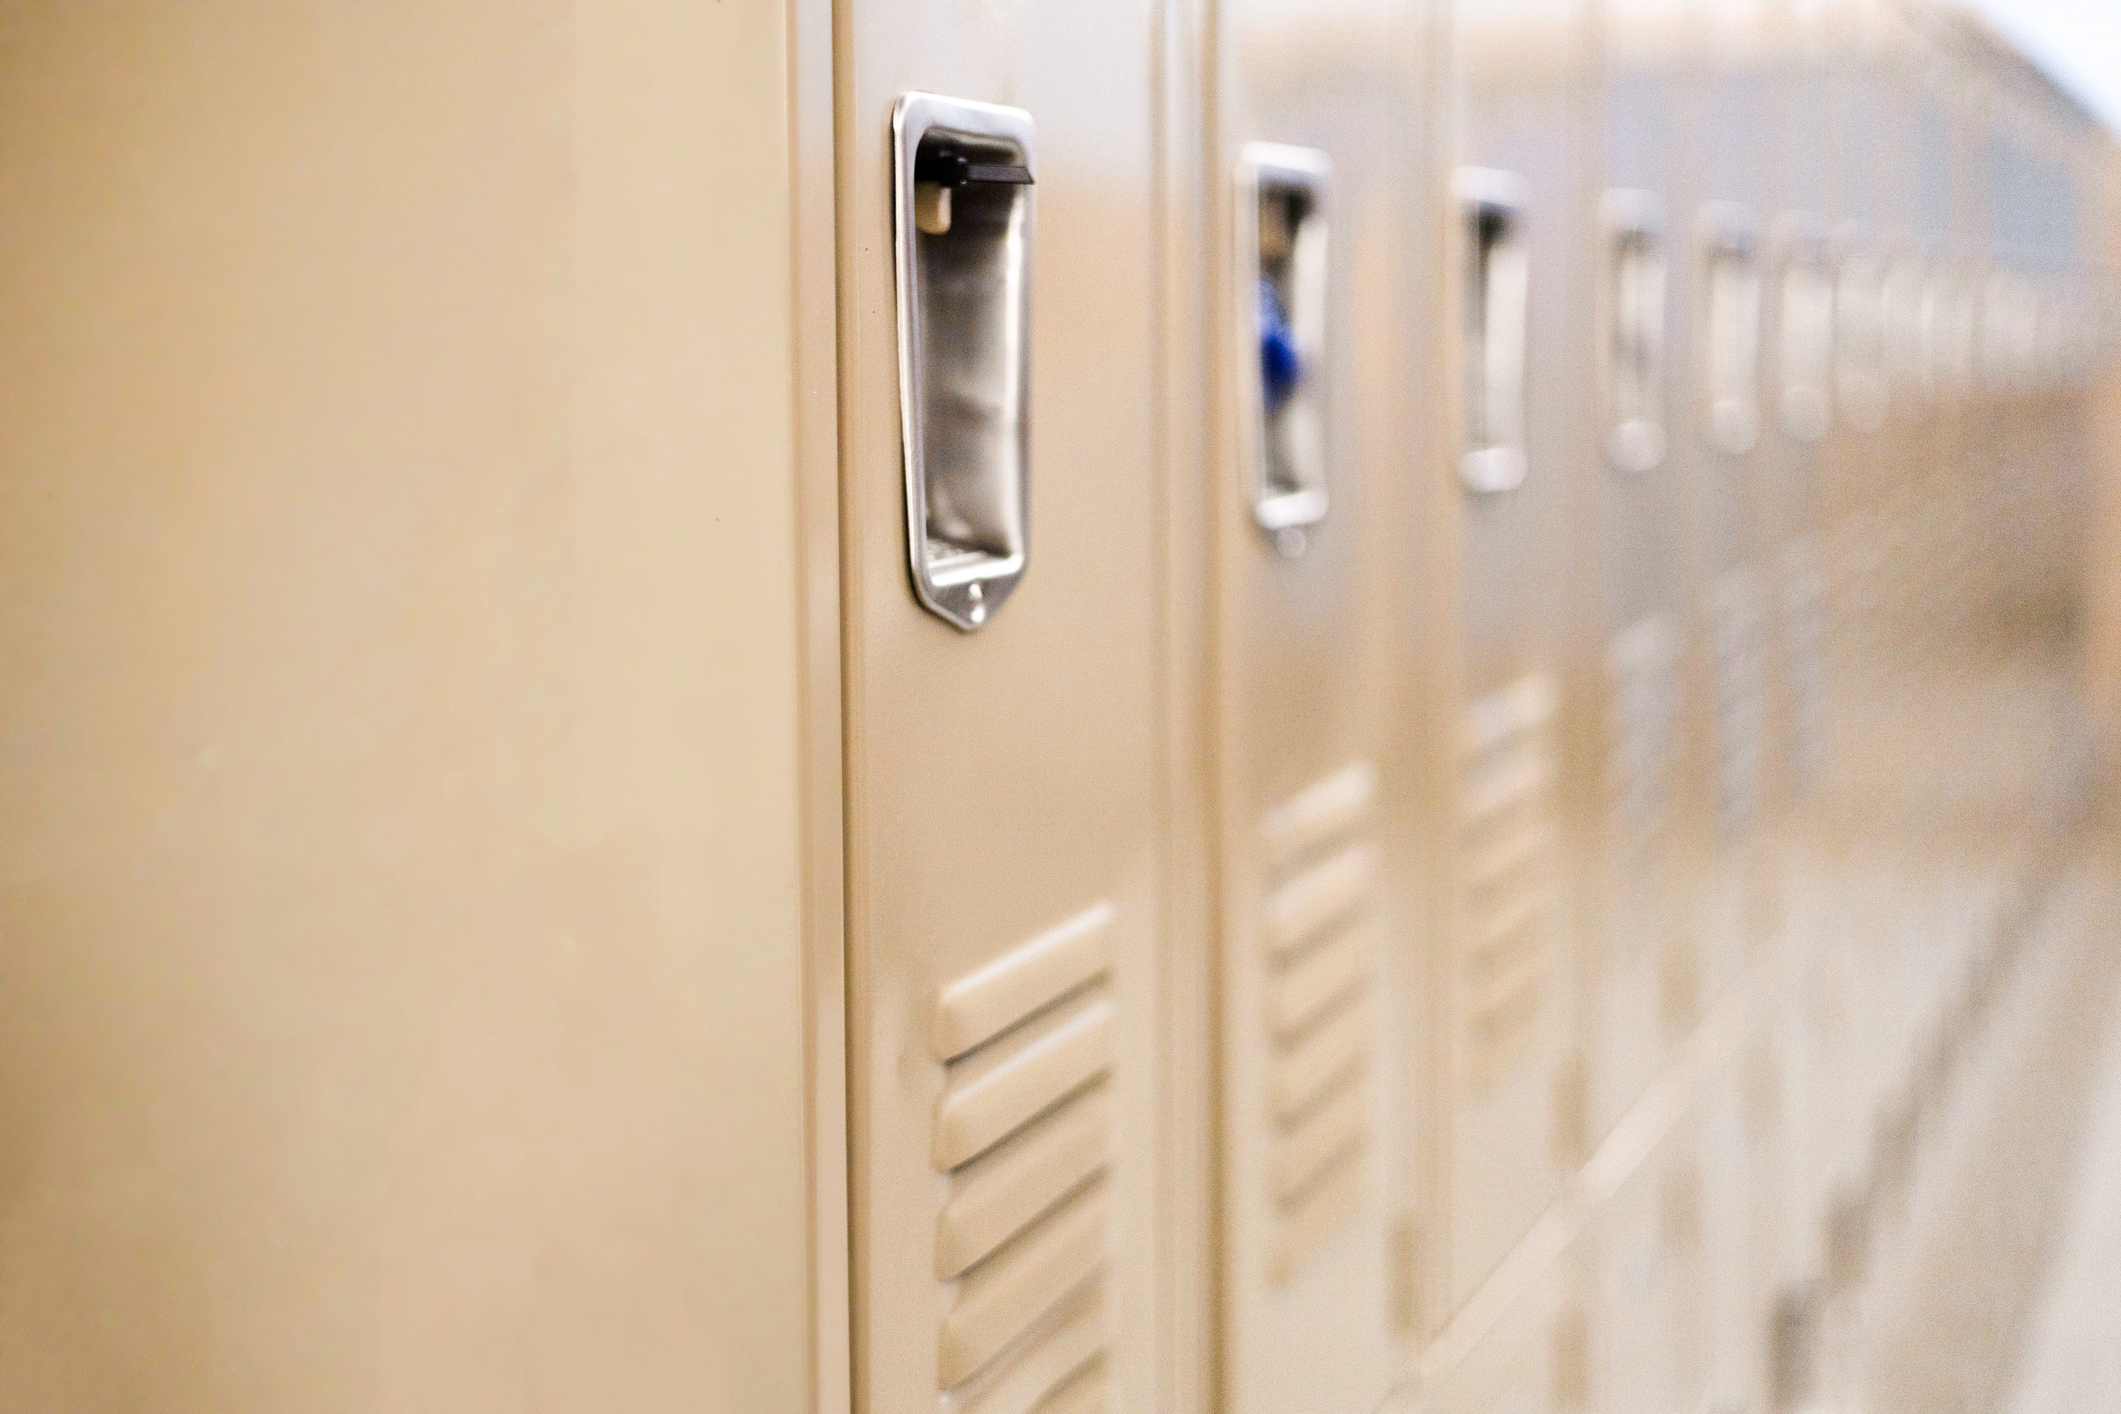 A row of school lockers